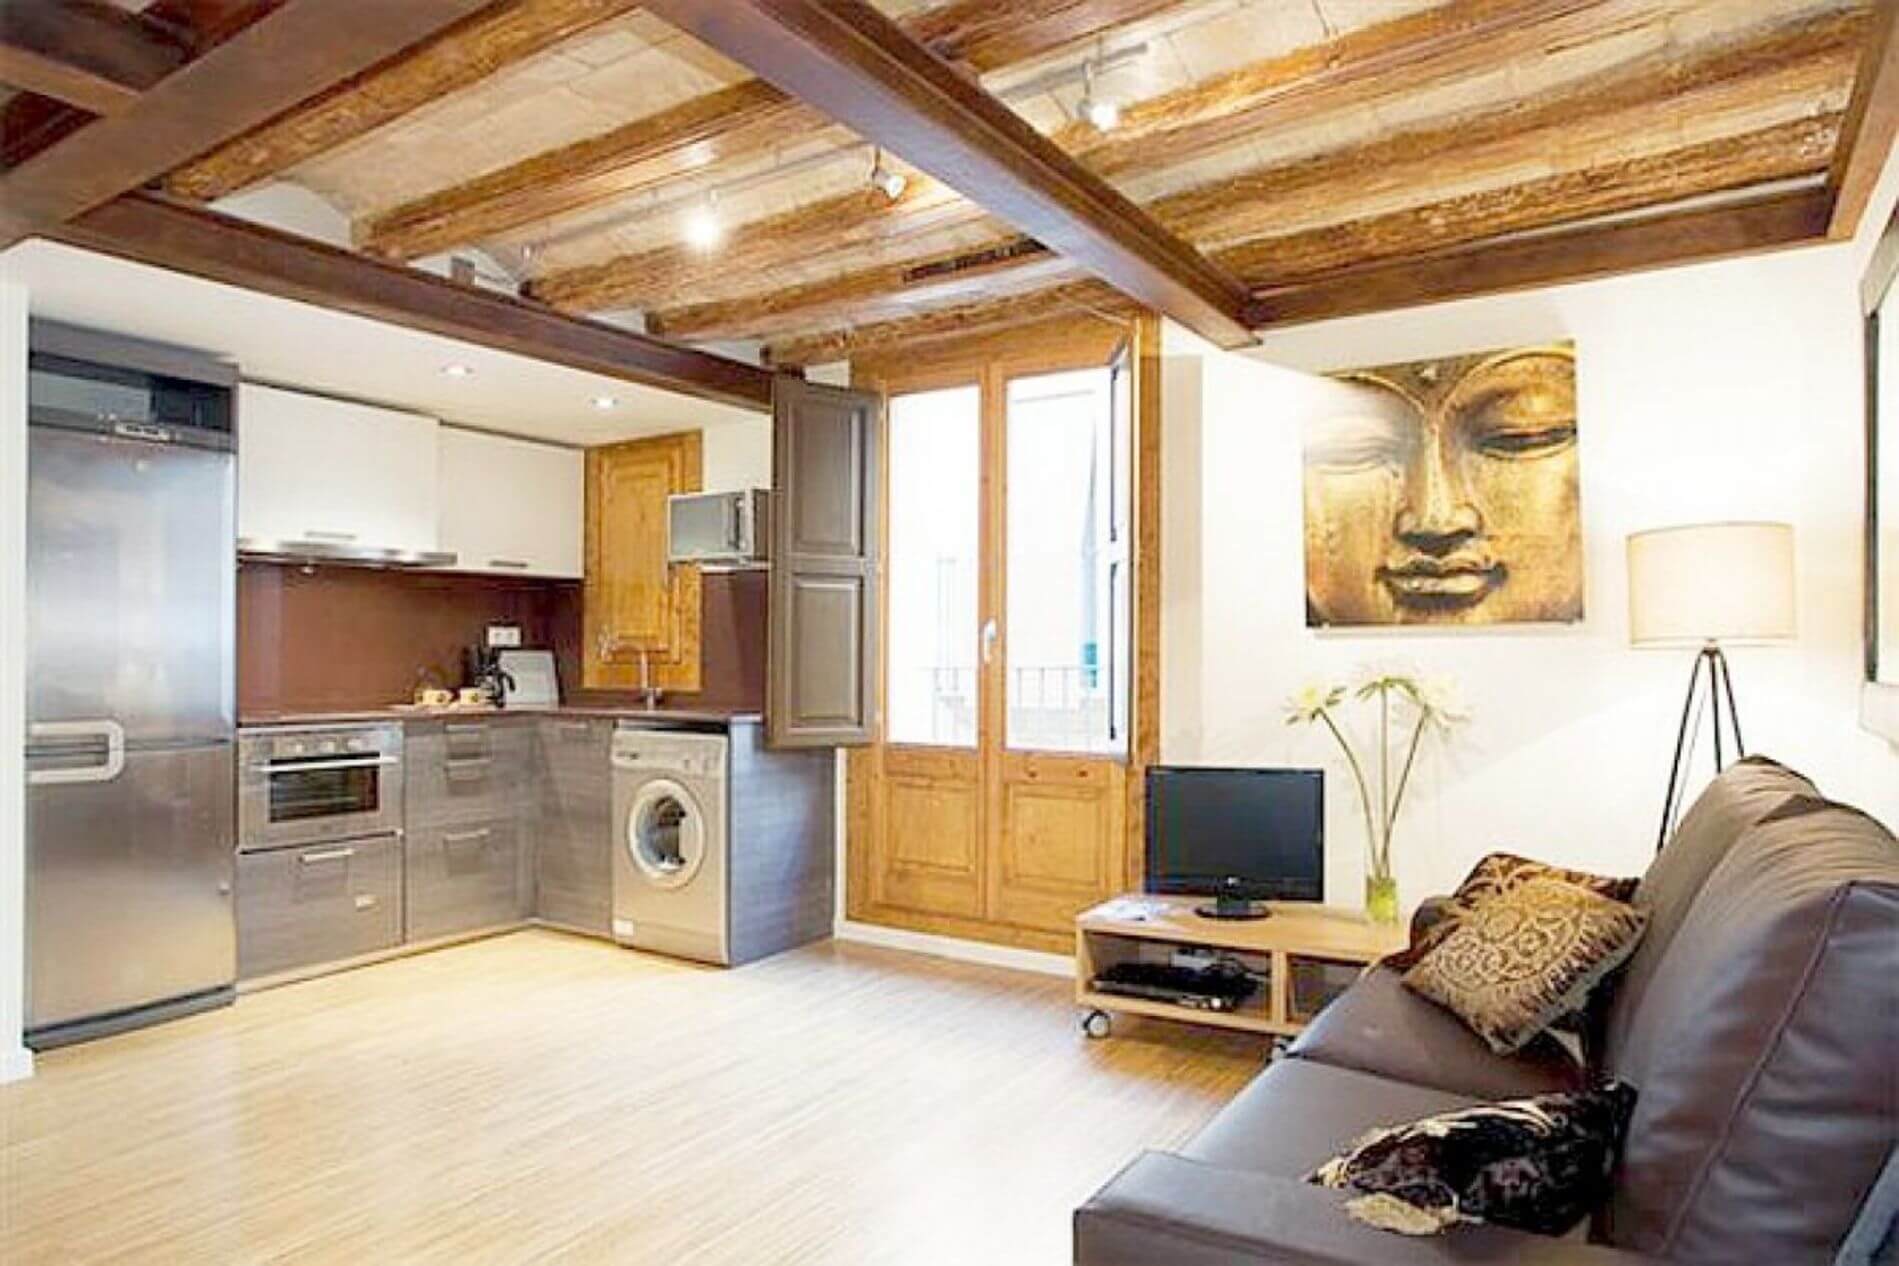 Fully furnished property rental near La Rambla, Barcelona